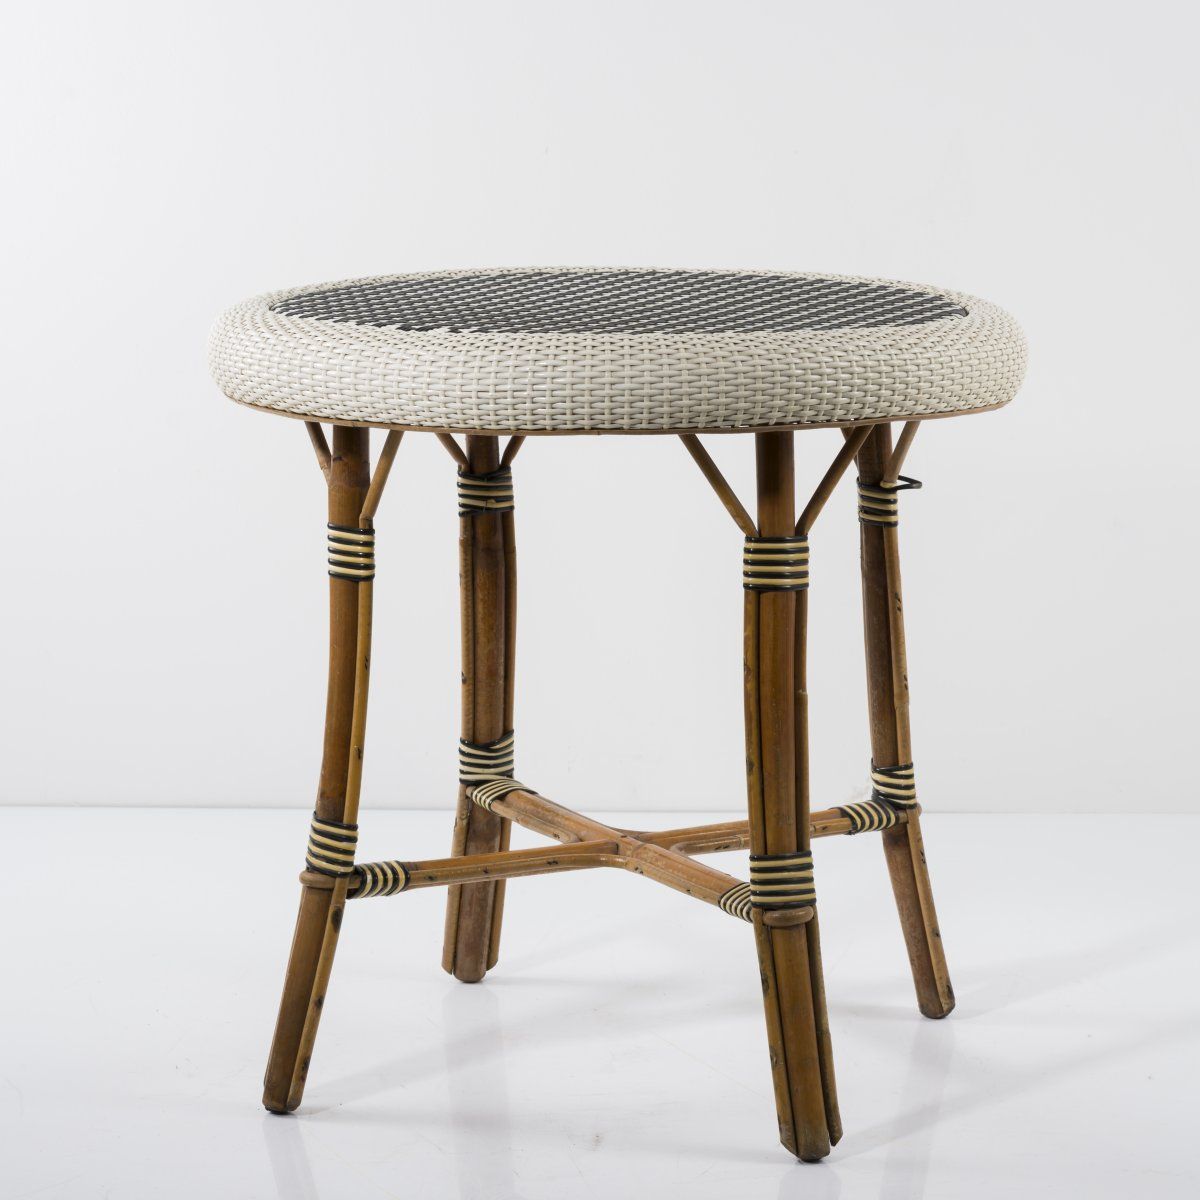 Null Drucker, Paris, Bistro table, 1920s, H. 69 cm, D. 73 cm. Bamboo cane, plywo&hellip;